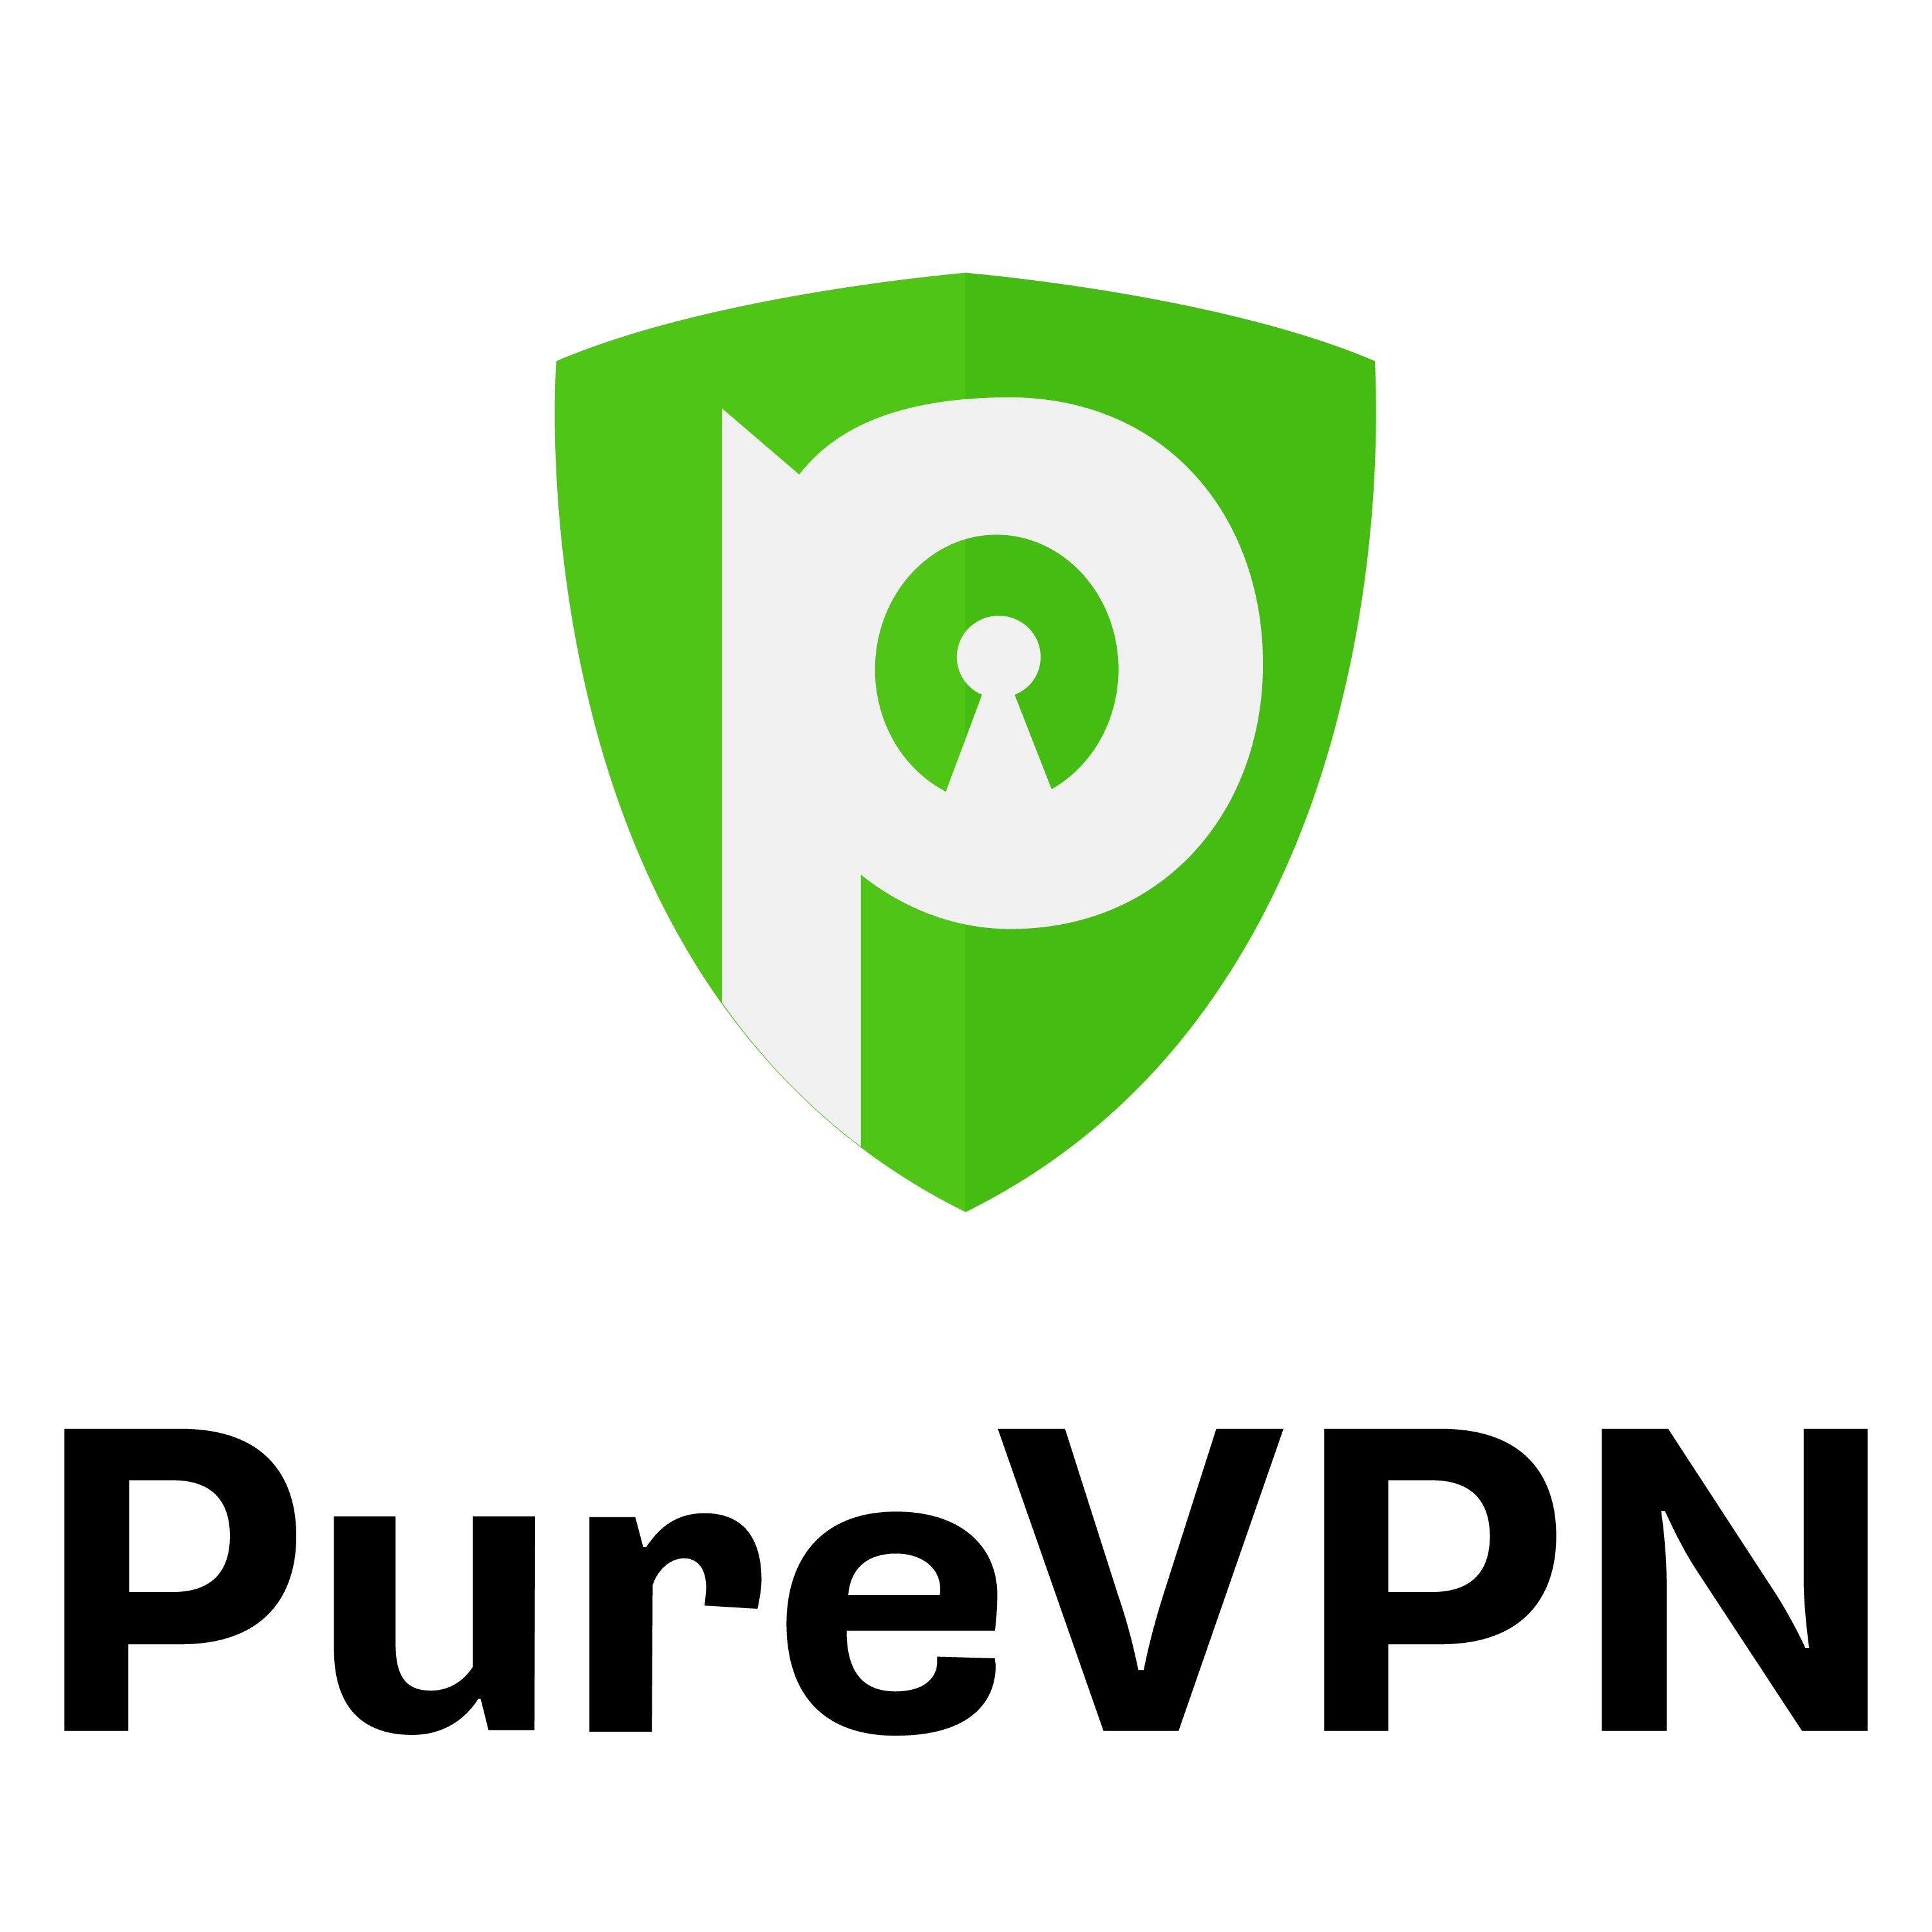 purevpn free download for windows 10